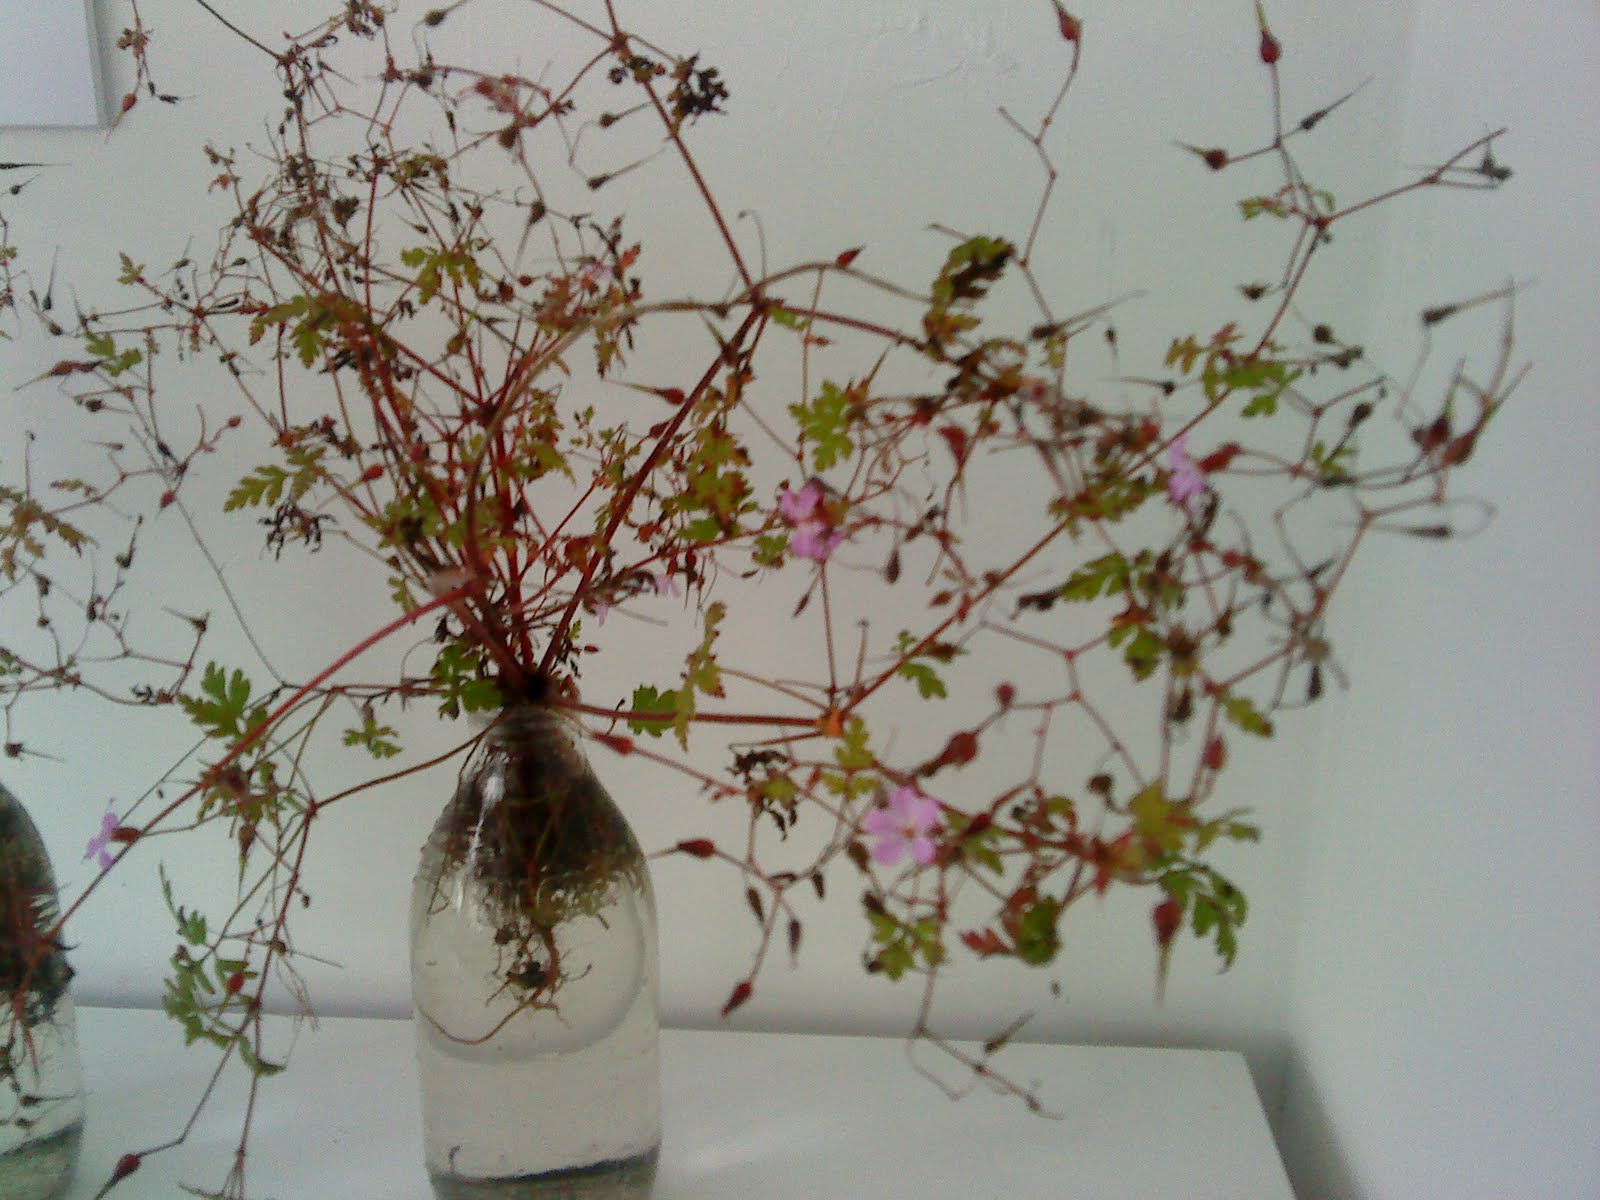 http://4.bp.blogspot.com/_UqJoWahooh0/TJN3S4KfSxI/AAAAAAAAATg/8gFndLkGwds/s1600/pink+flower+red+stem.JPG